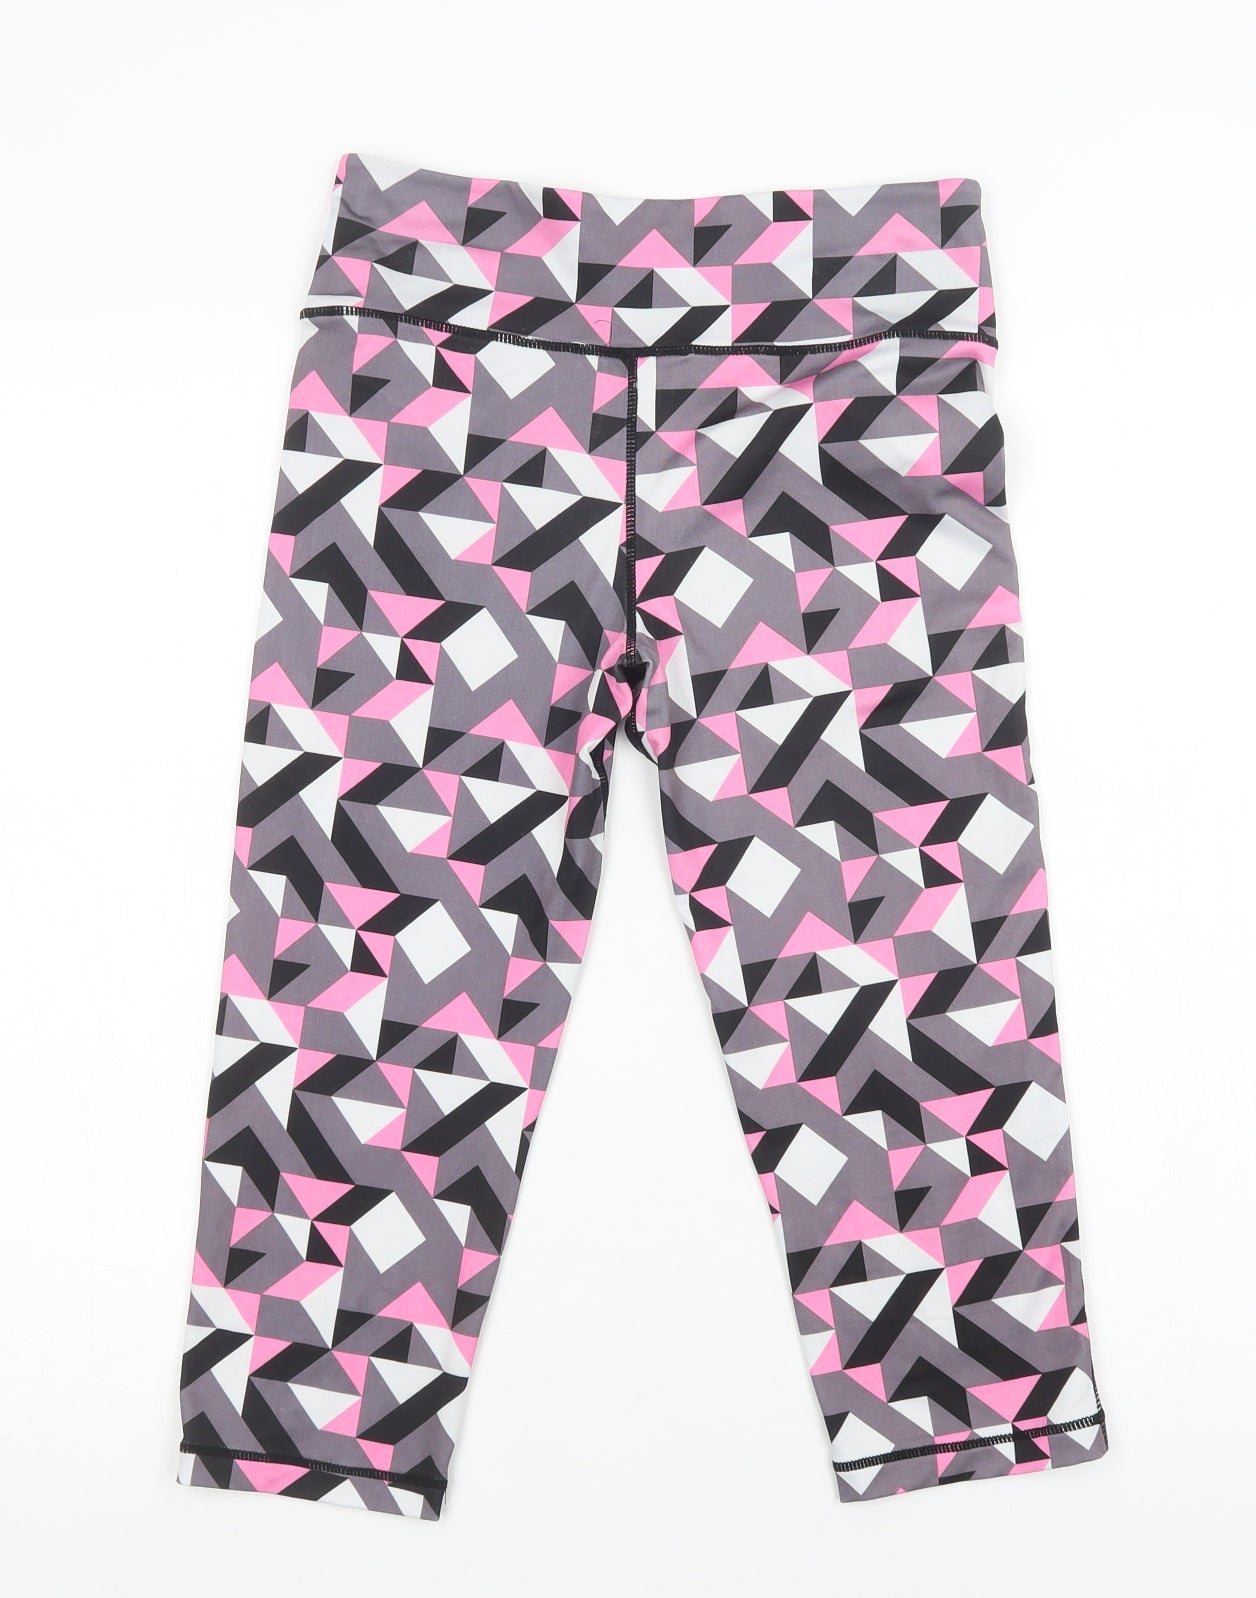 Everlast Womens Multicoloured Geometric Polyester Cropped Leggings Size 10 L20 in Regular